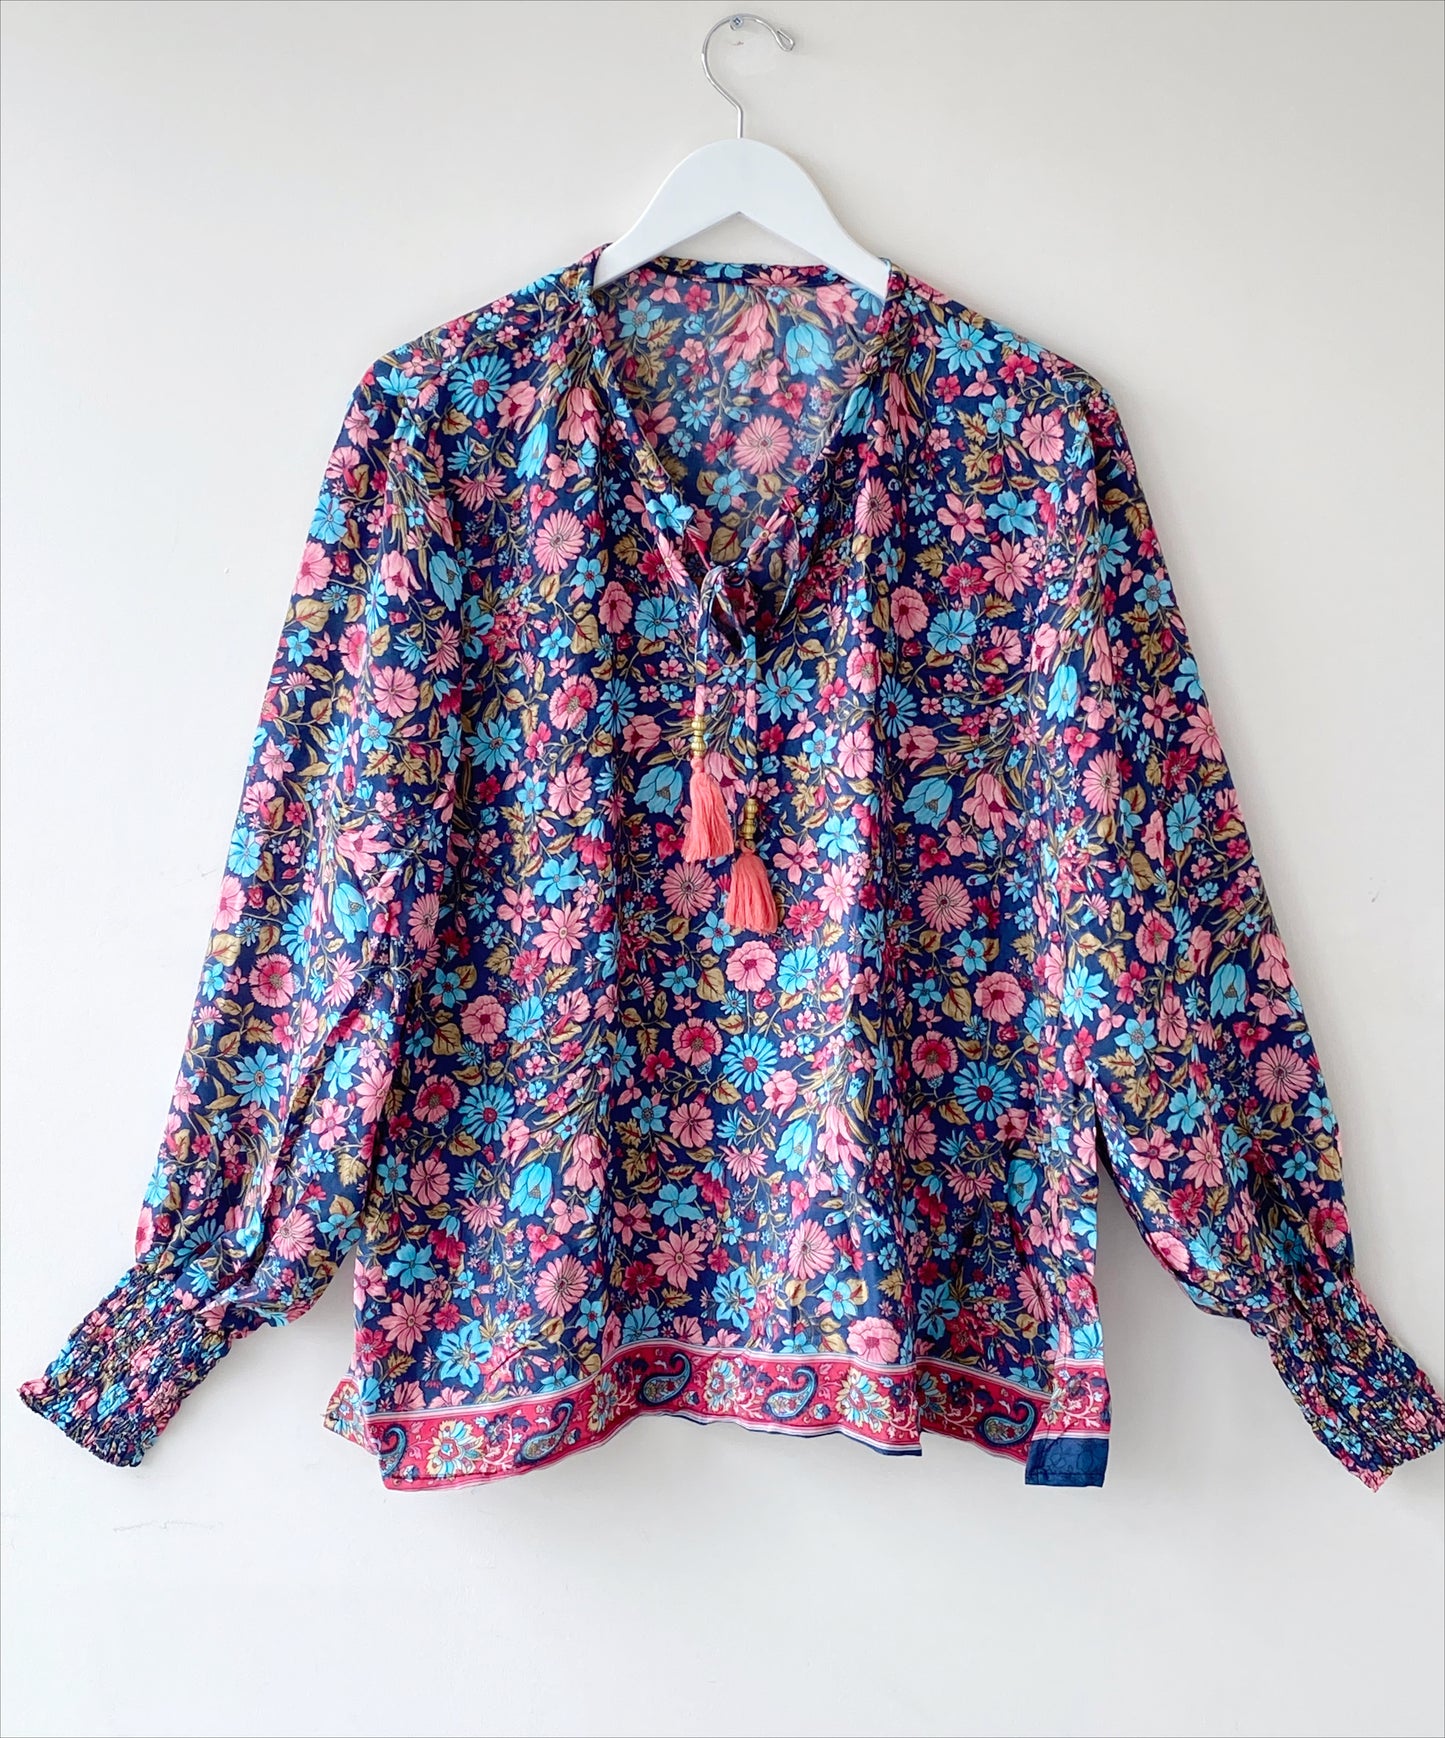 Florence navy/purple floral-print blouse free size UK 8-14blouse